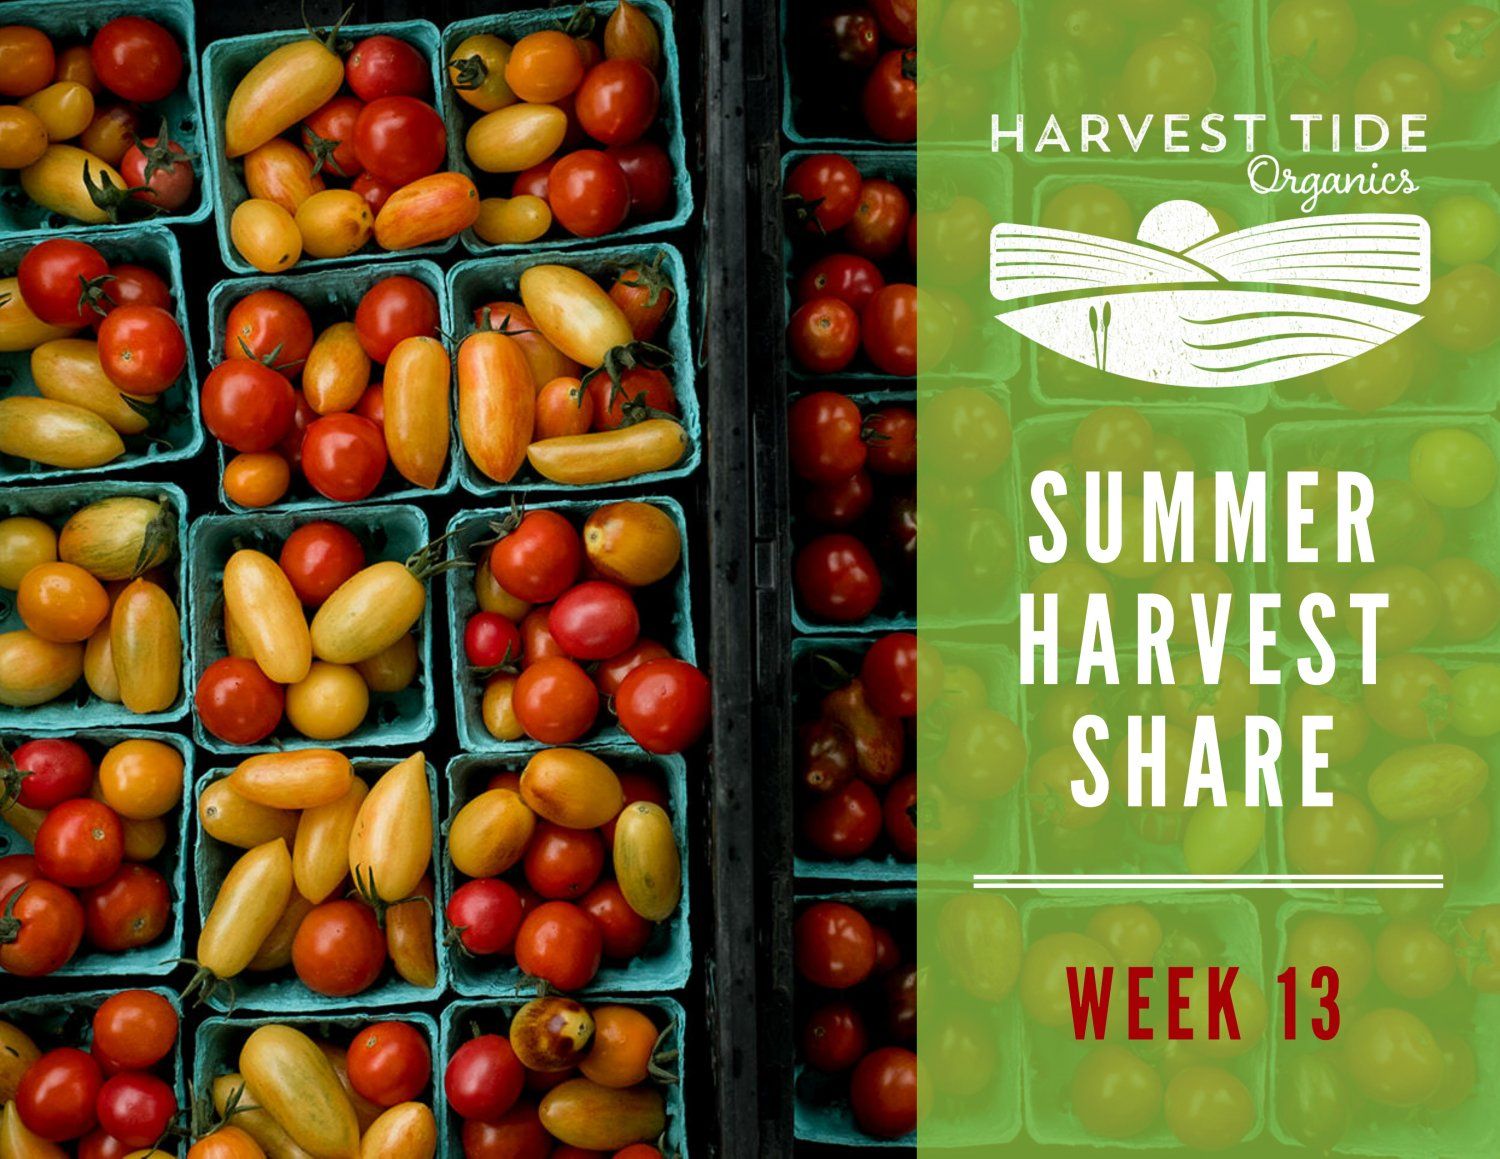 Previous Happening: Summer Harvest Share - Week 13